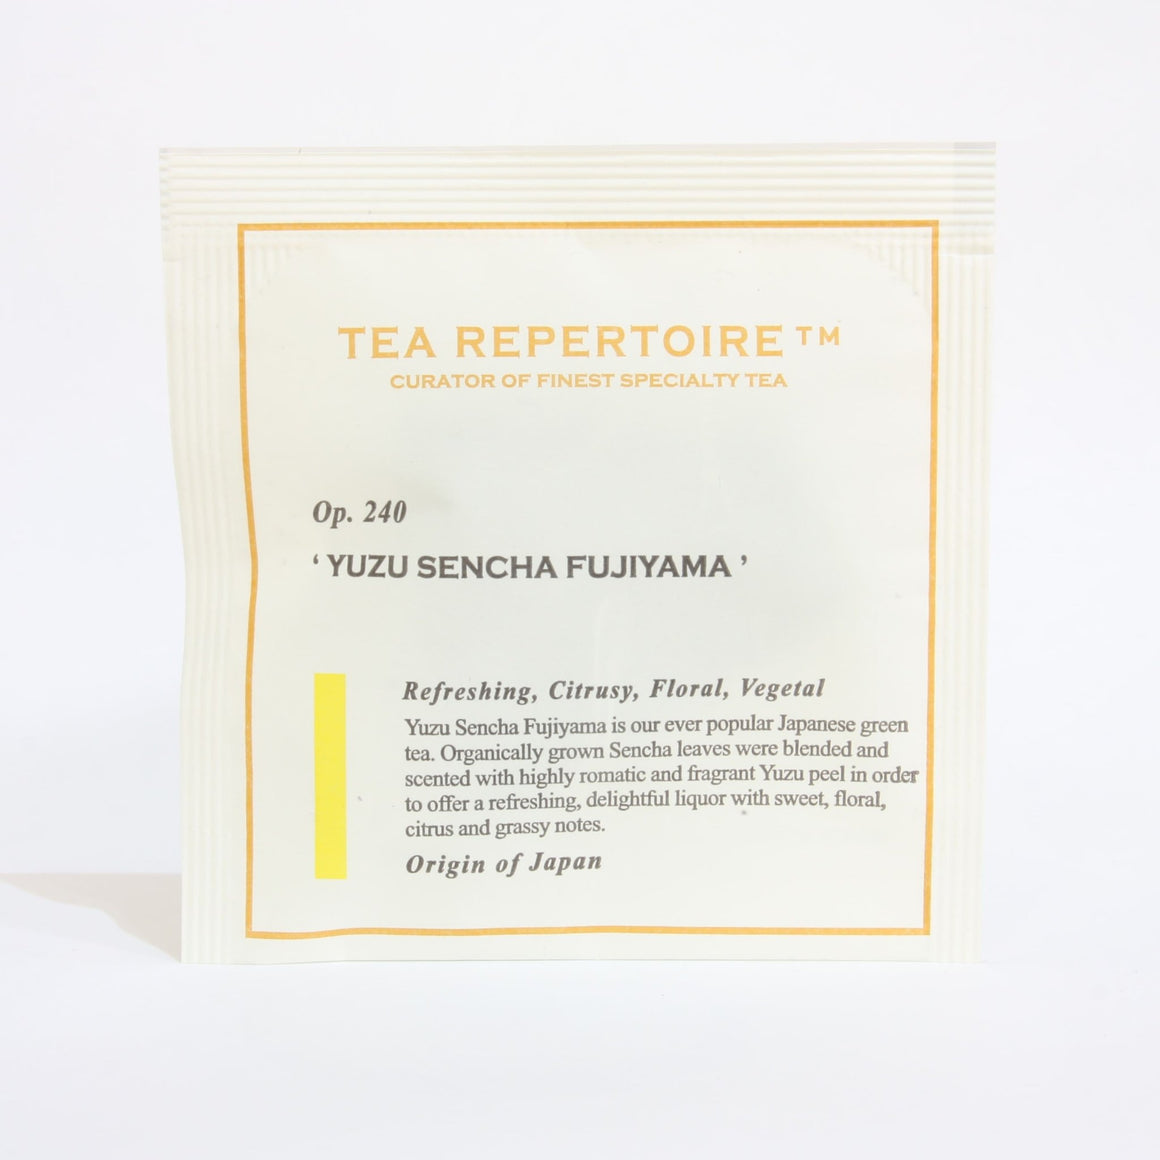 Individually Wrapped Yuzu Sencha Fujiyama Pyramid Tea Bags - Tea Repertoire